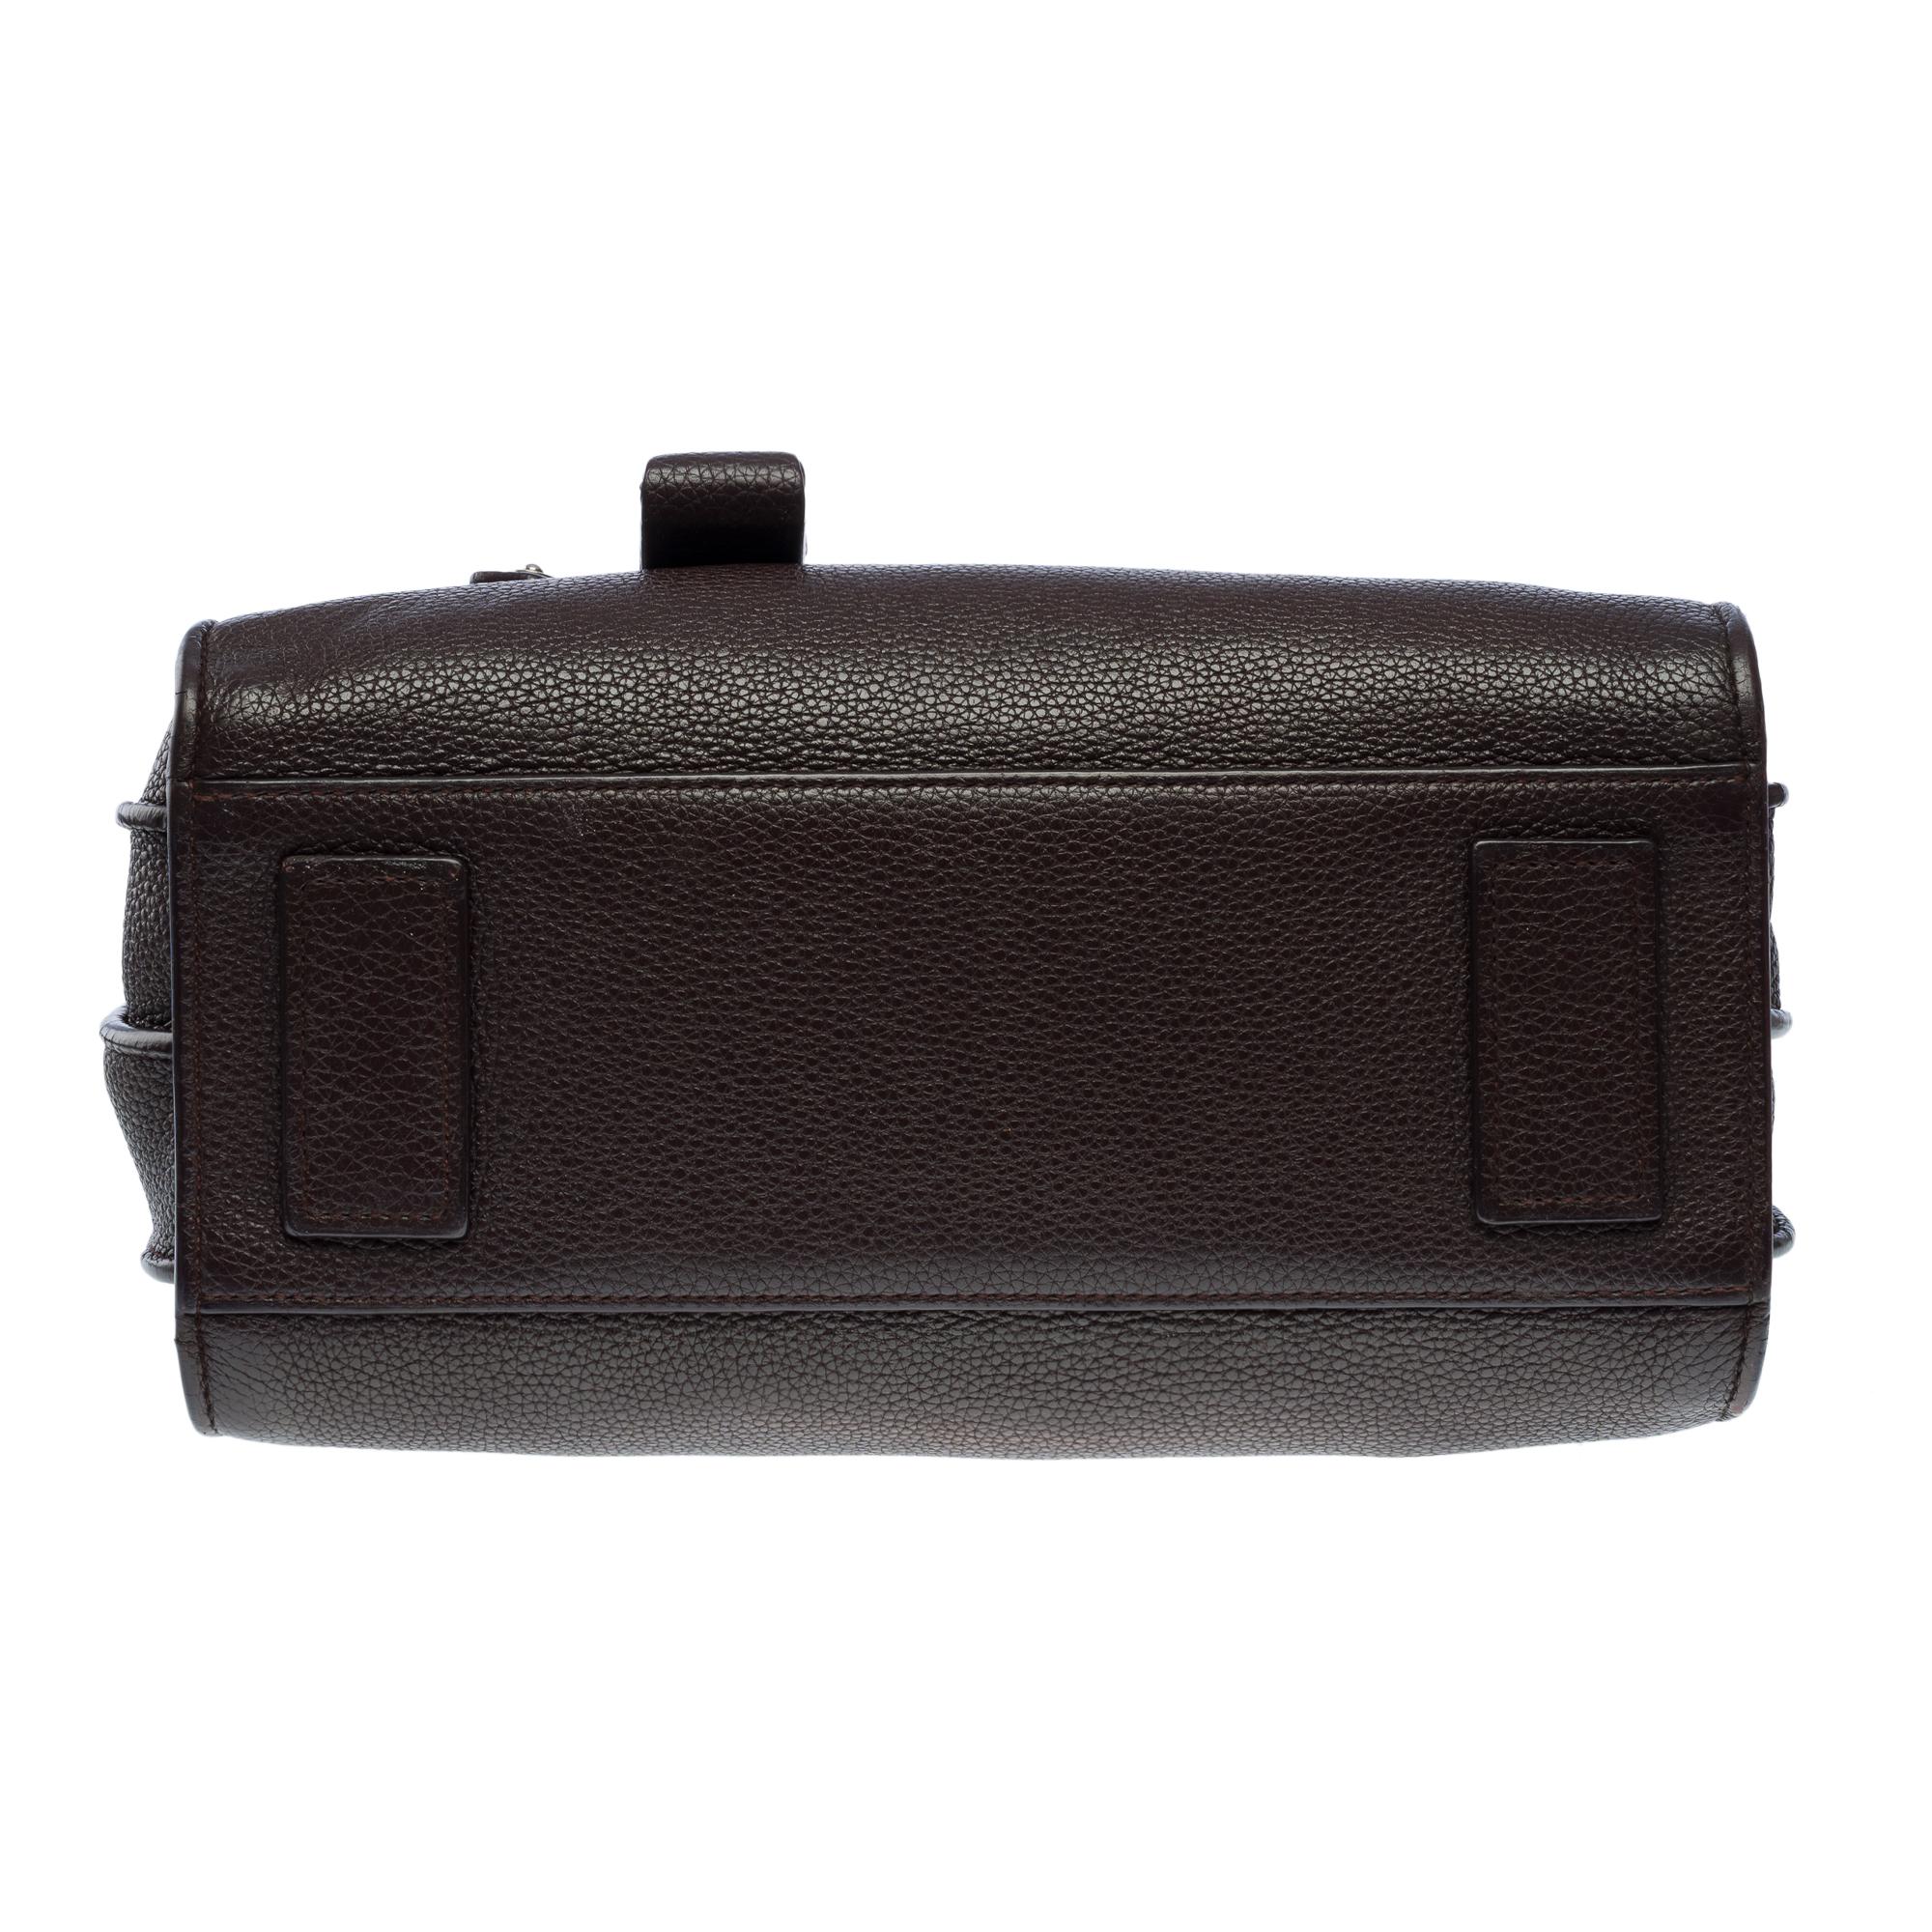 Saint Laurent Nano Sac de Jour handbag strap in burgundy grained leather, SHW For Sale 6